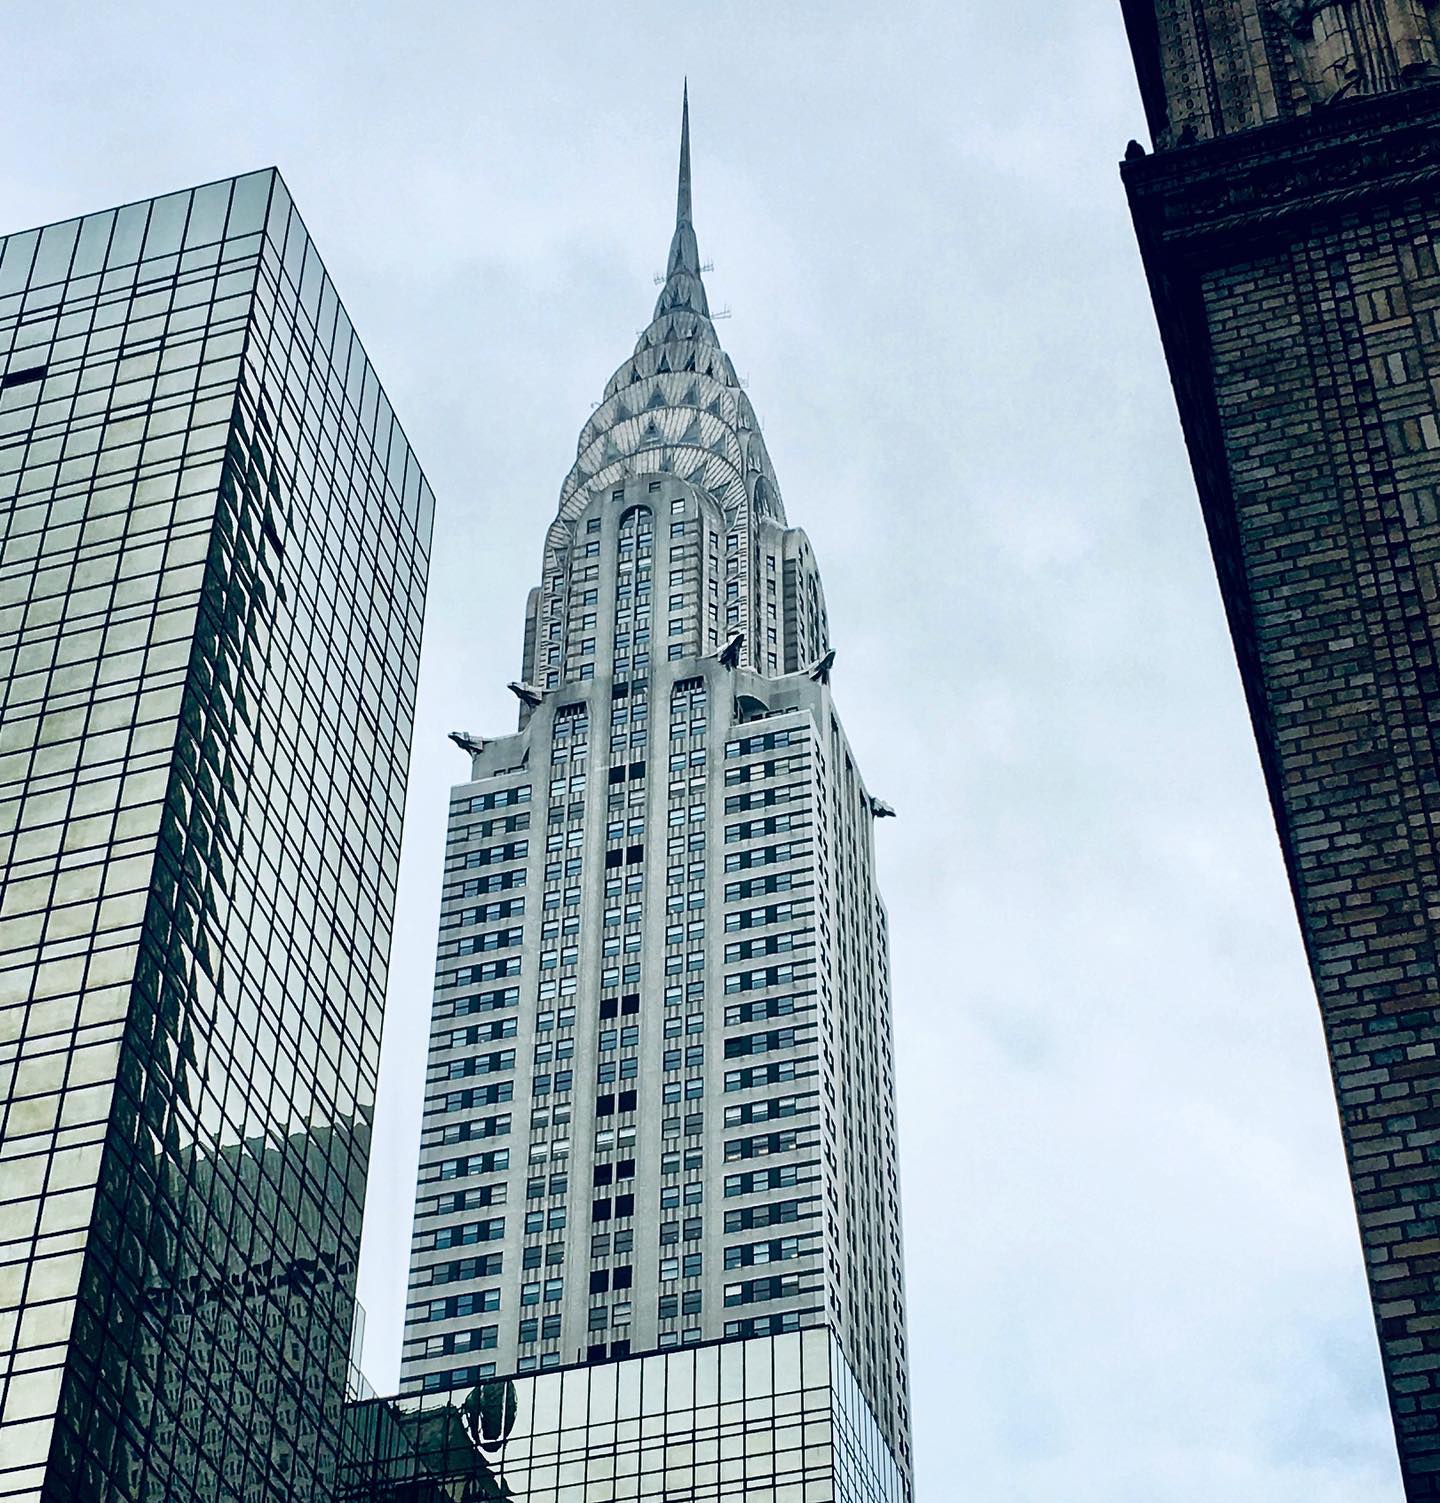 Chrysler Building, NYC
Still one of the most beautiful skyscrapers in the world.
#newyork #newyorkcity #newyorkcityphotography #newyorkcitylife #skyscraper #chryslerbuilding #manhattan #artdeco #architecture #architecturephotography #ilovenewyork #midtownmanhattan #lovingnewyork #williamvanalen #travelgram #travelblogger #citygram #usatravels #instatravel